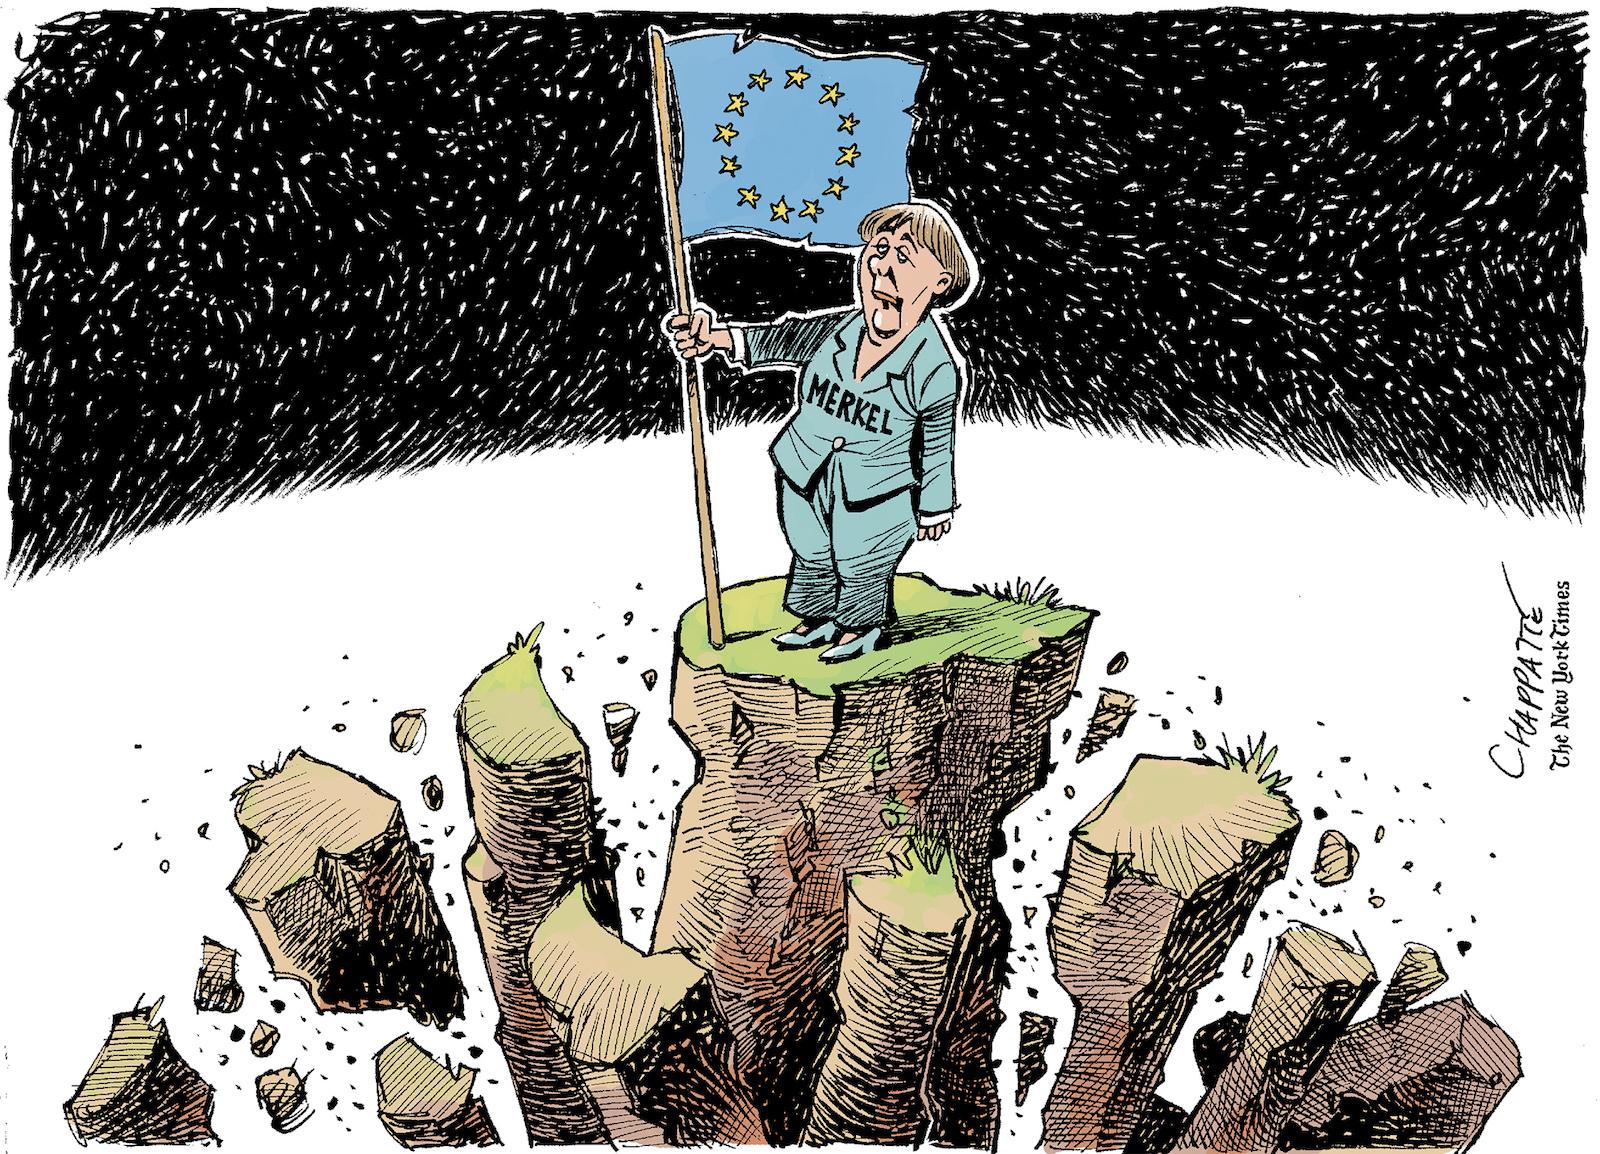 Merkel,the last one standing